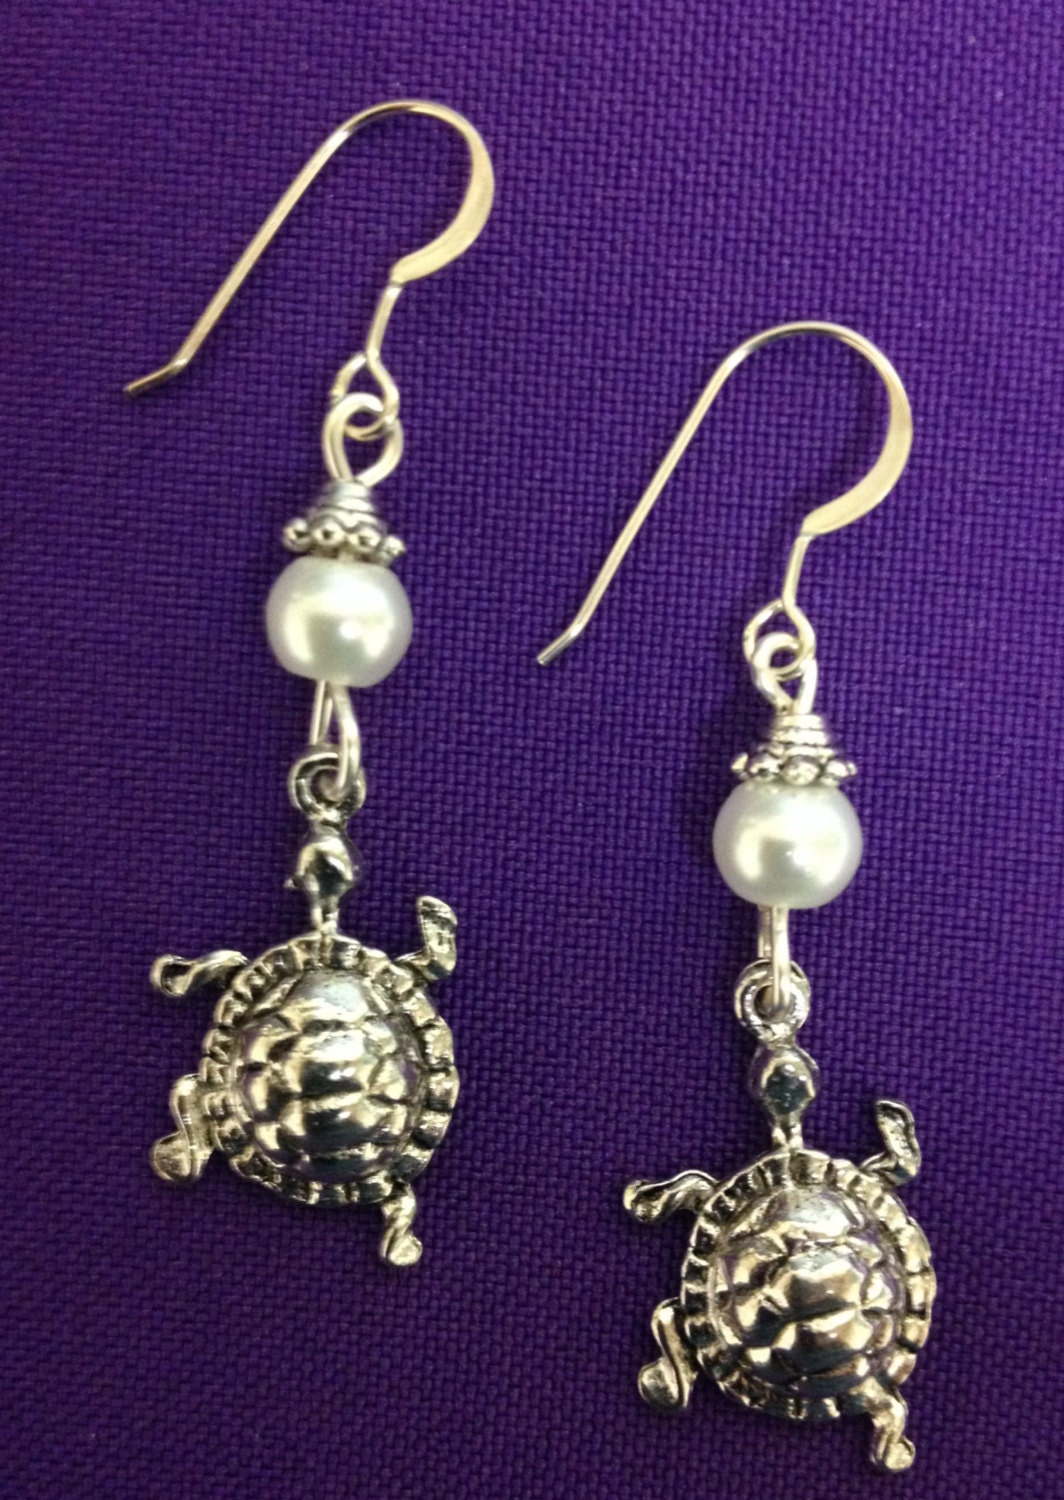 Turtle Sea Turtle or Tortoise Earrings on sterling silver | Etsy